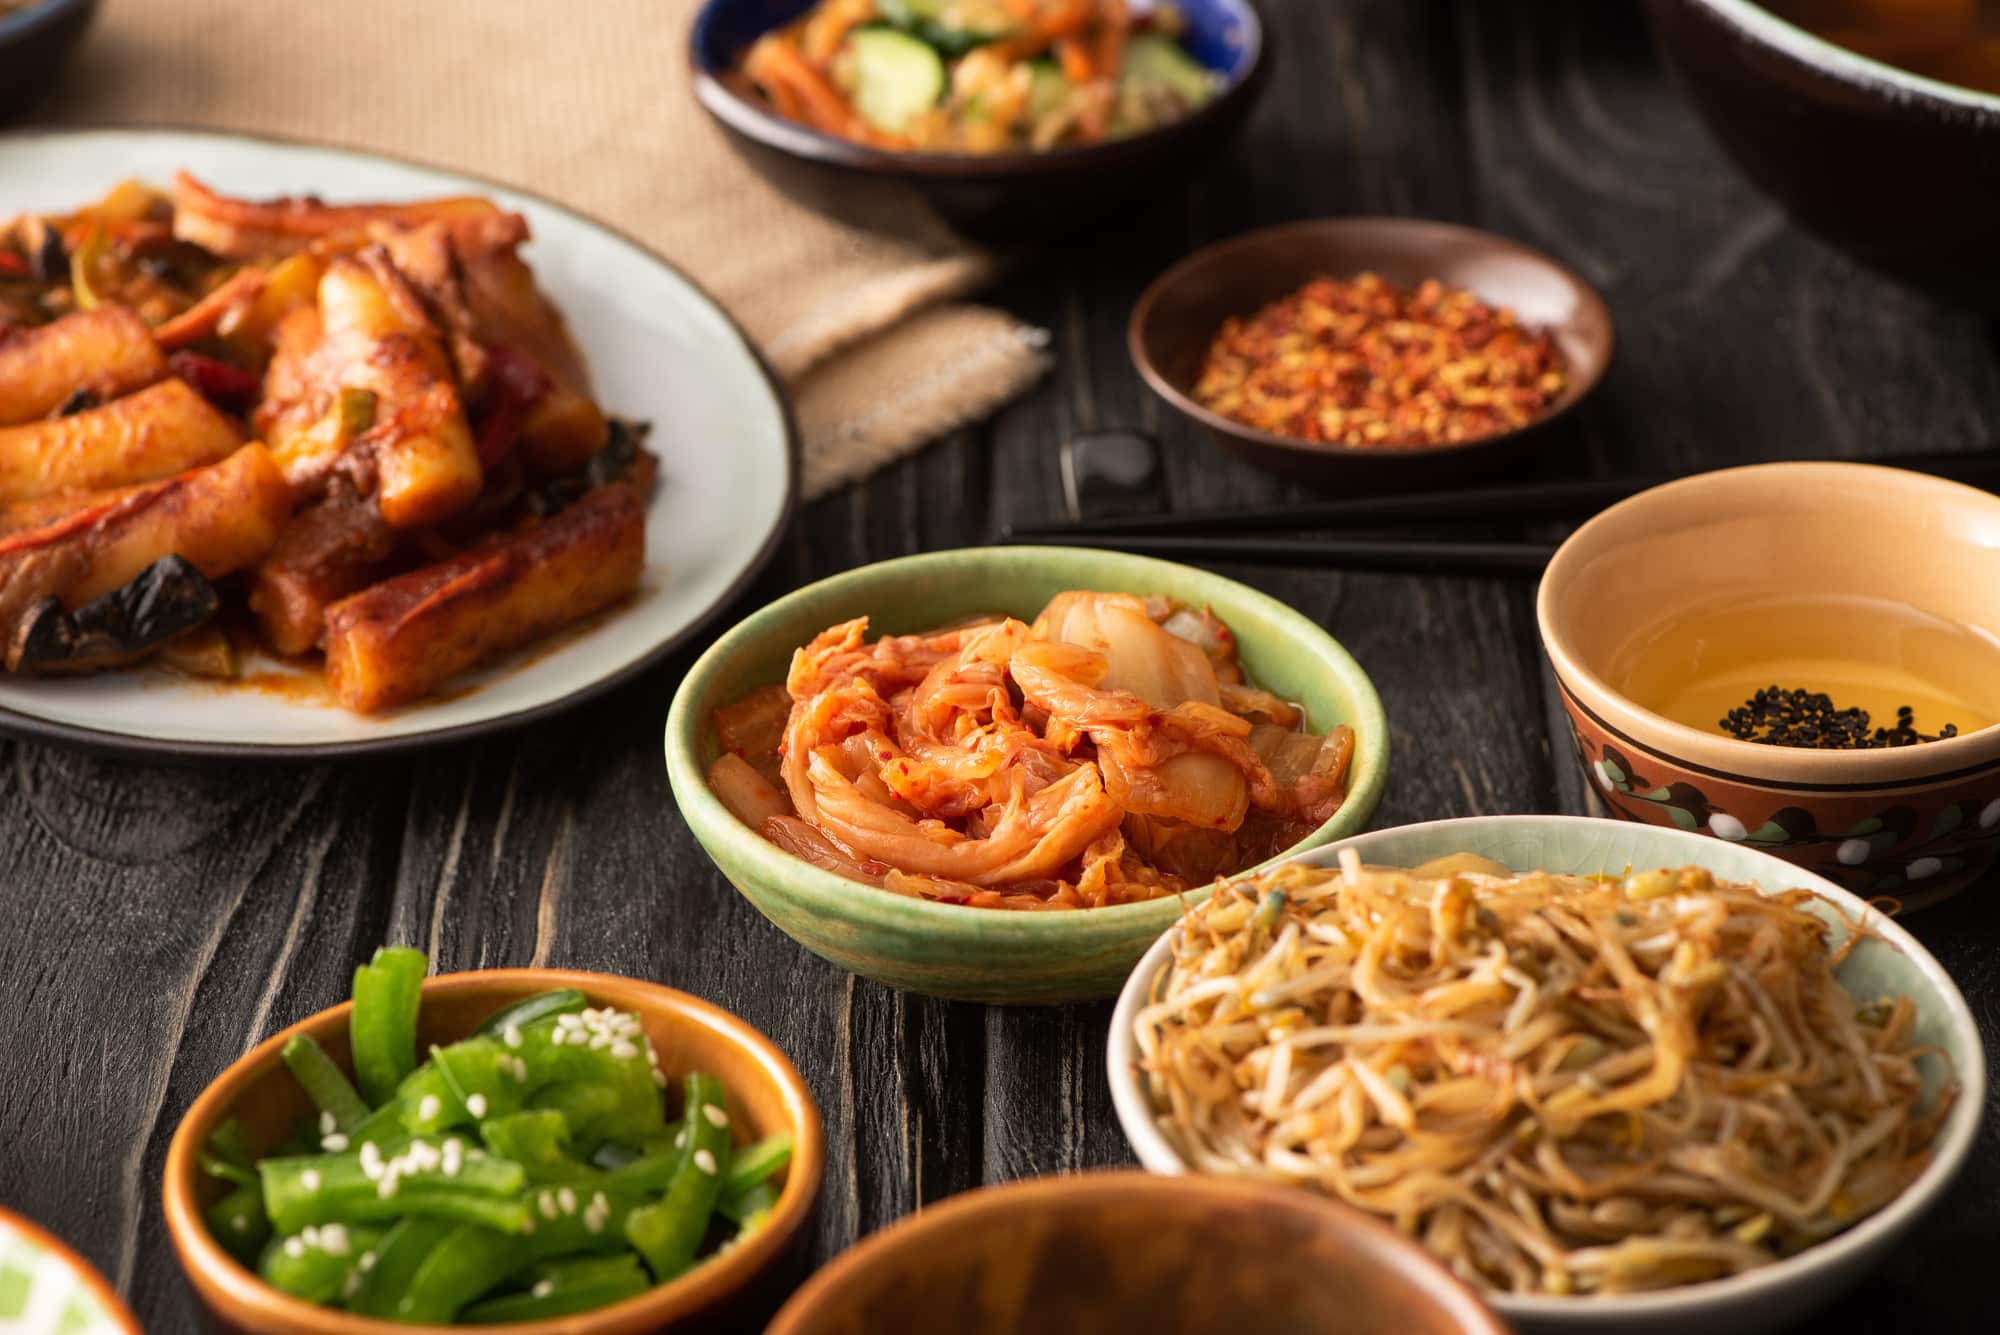 Kimchi near topokki and korean side dishes